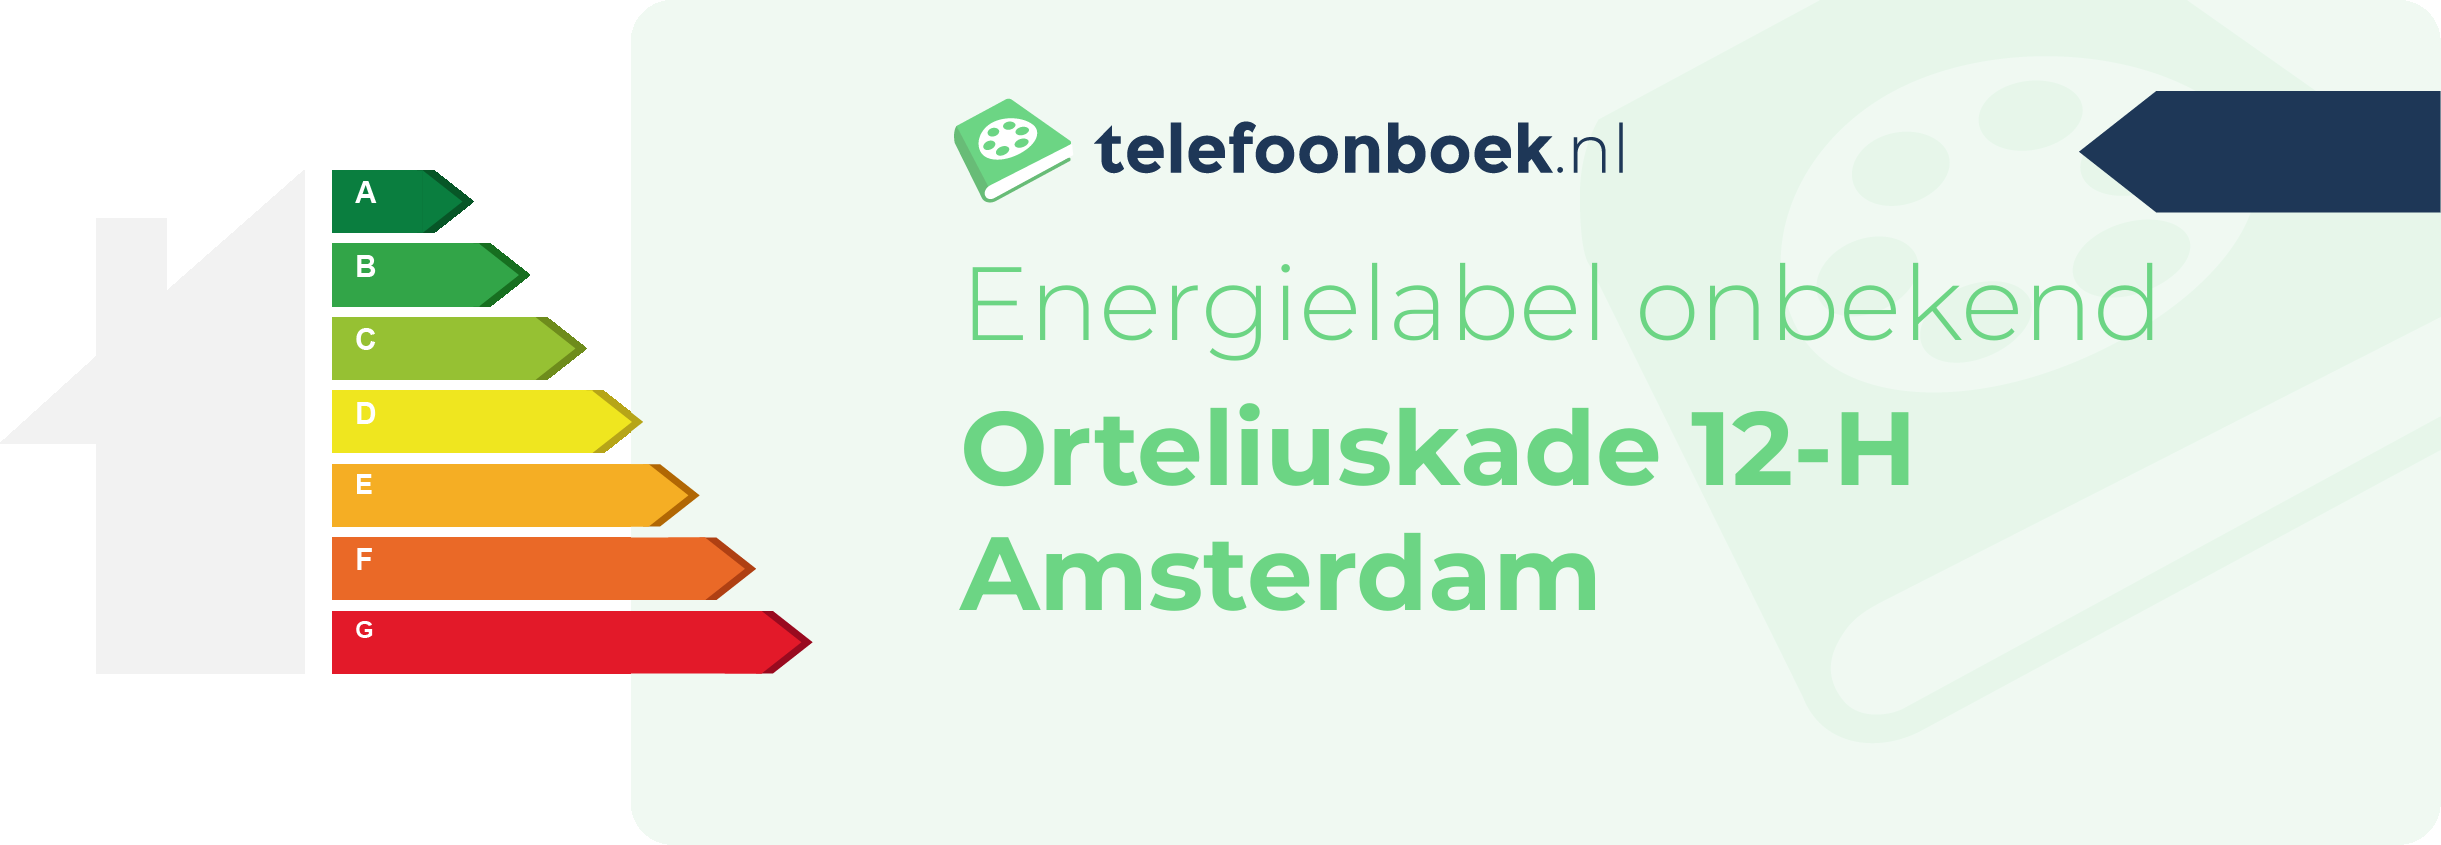 Energielabel Orteliuskade 12-H Amsterdam